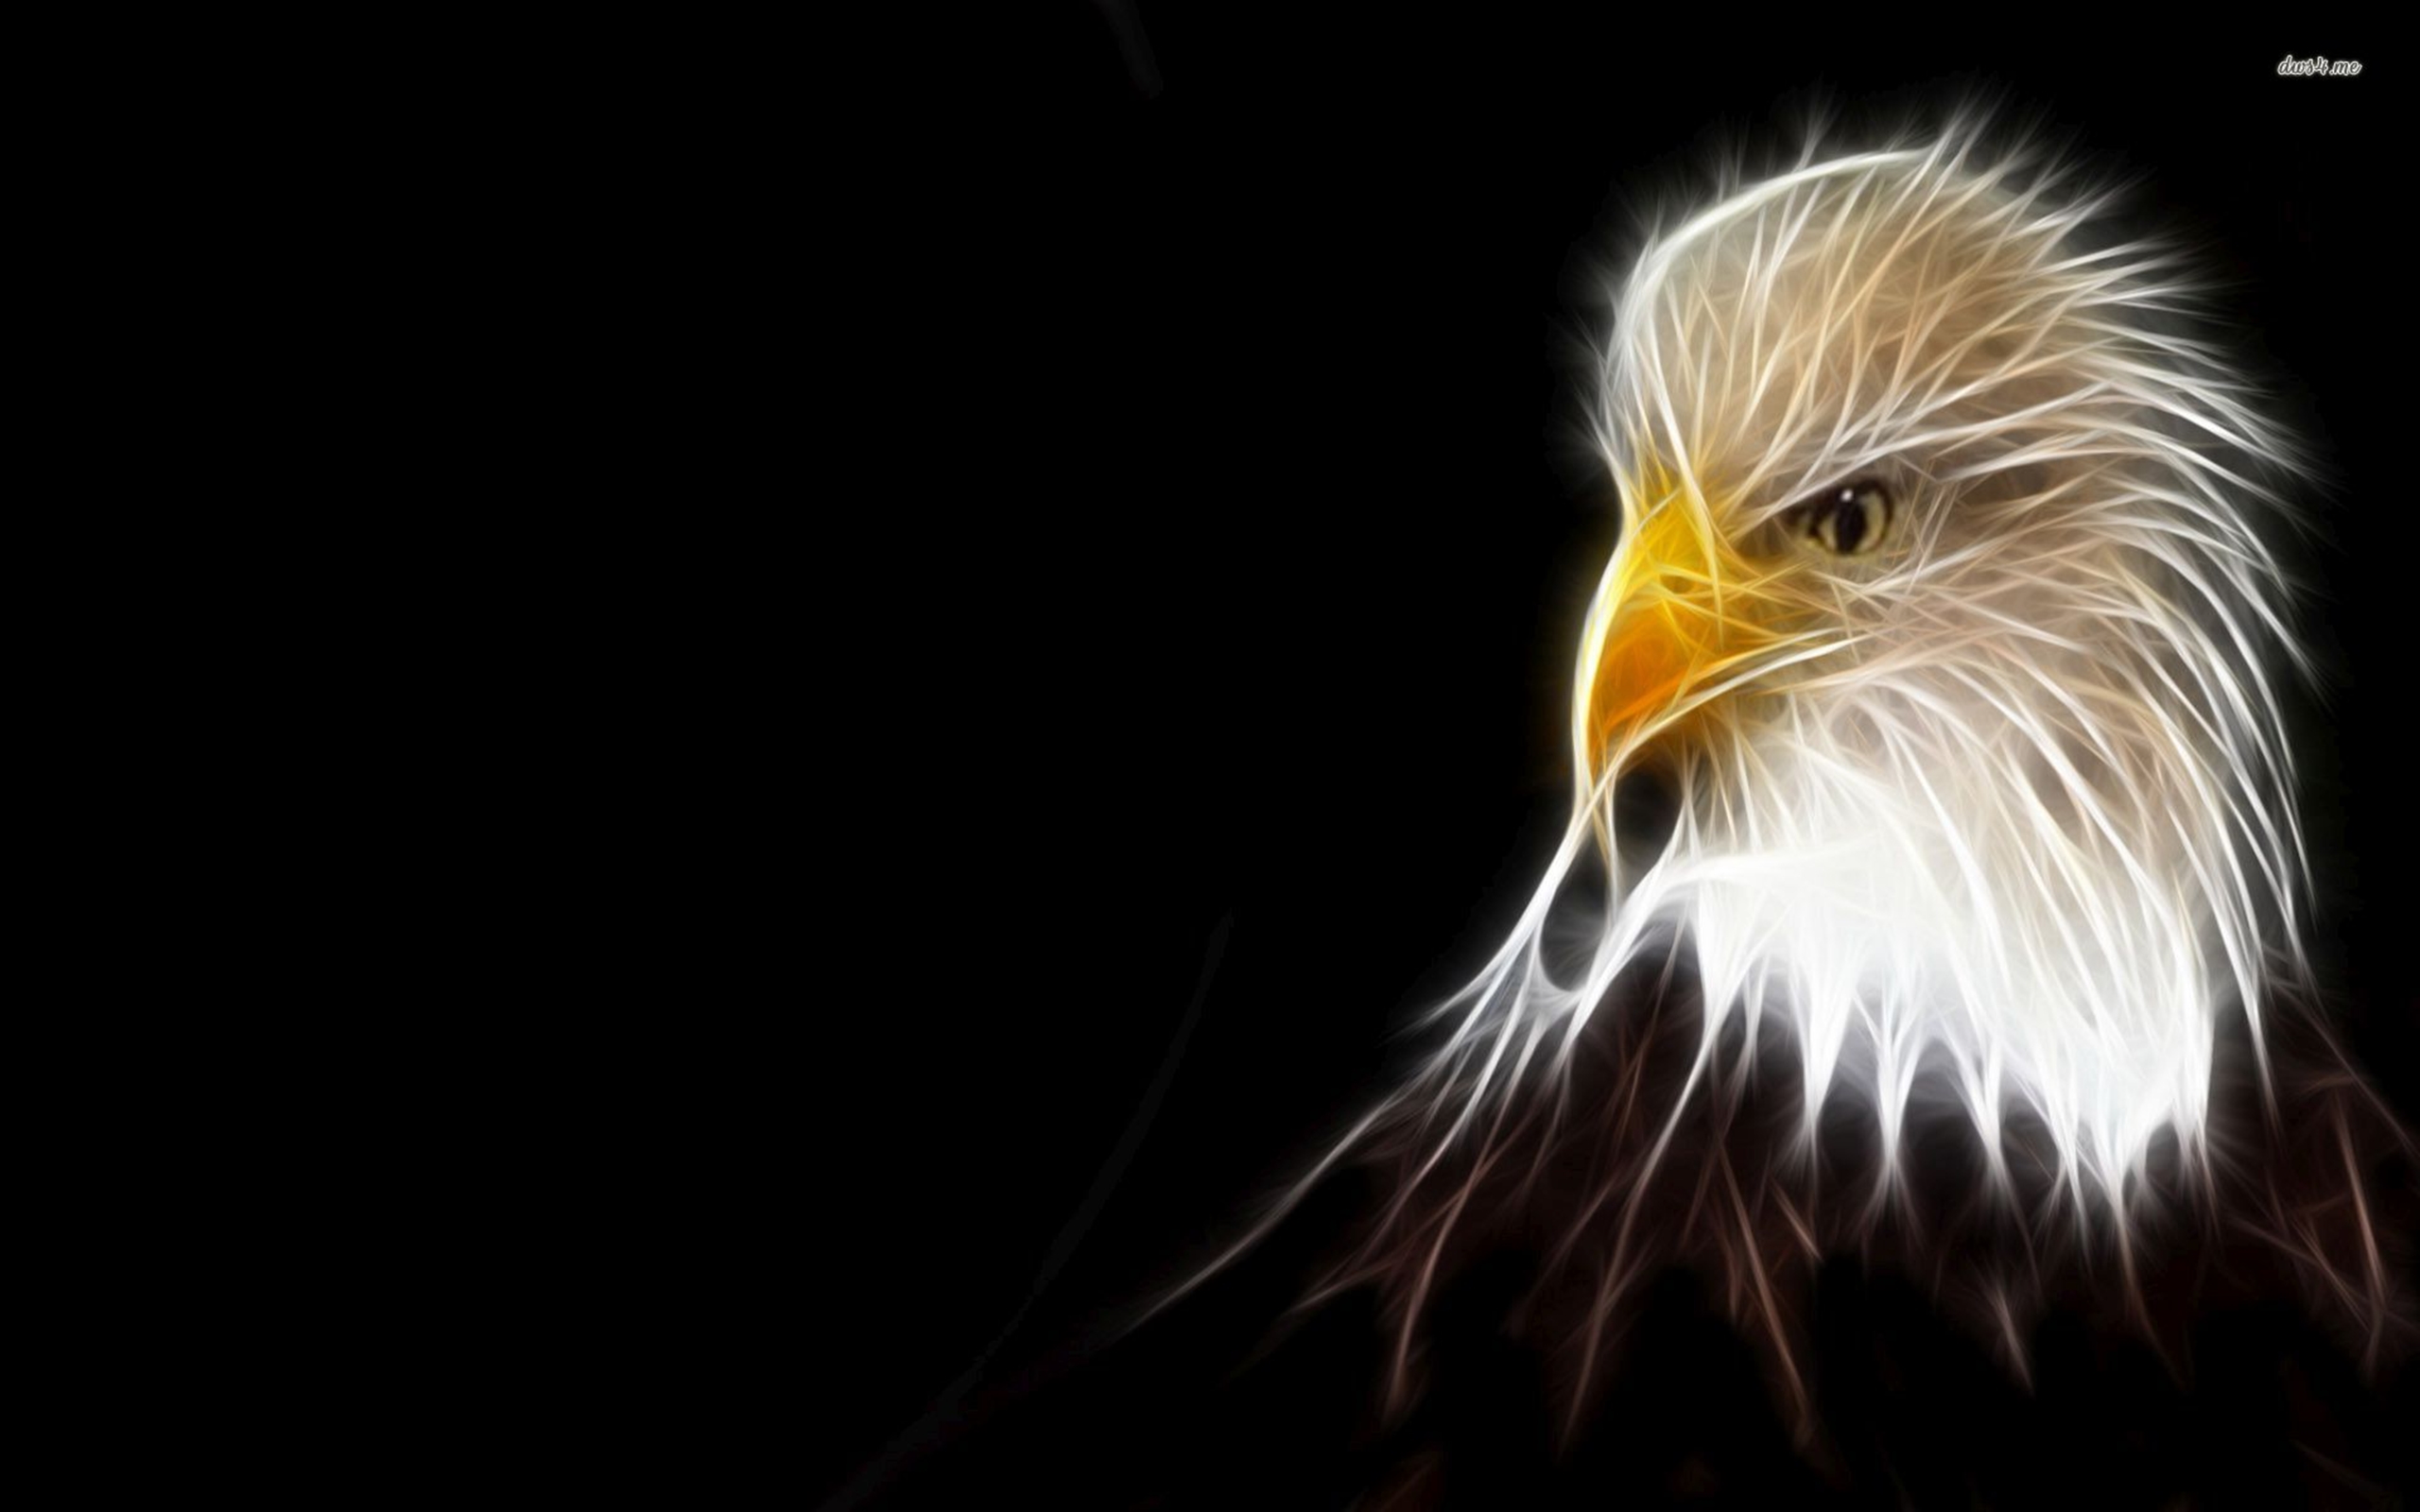 Lighted Eagle 2560x1600 Digital Art Wallpaper : Wallpapers13.com